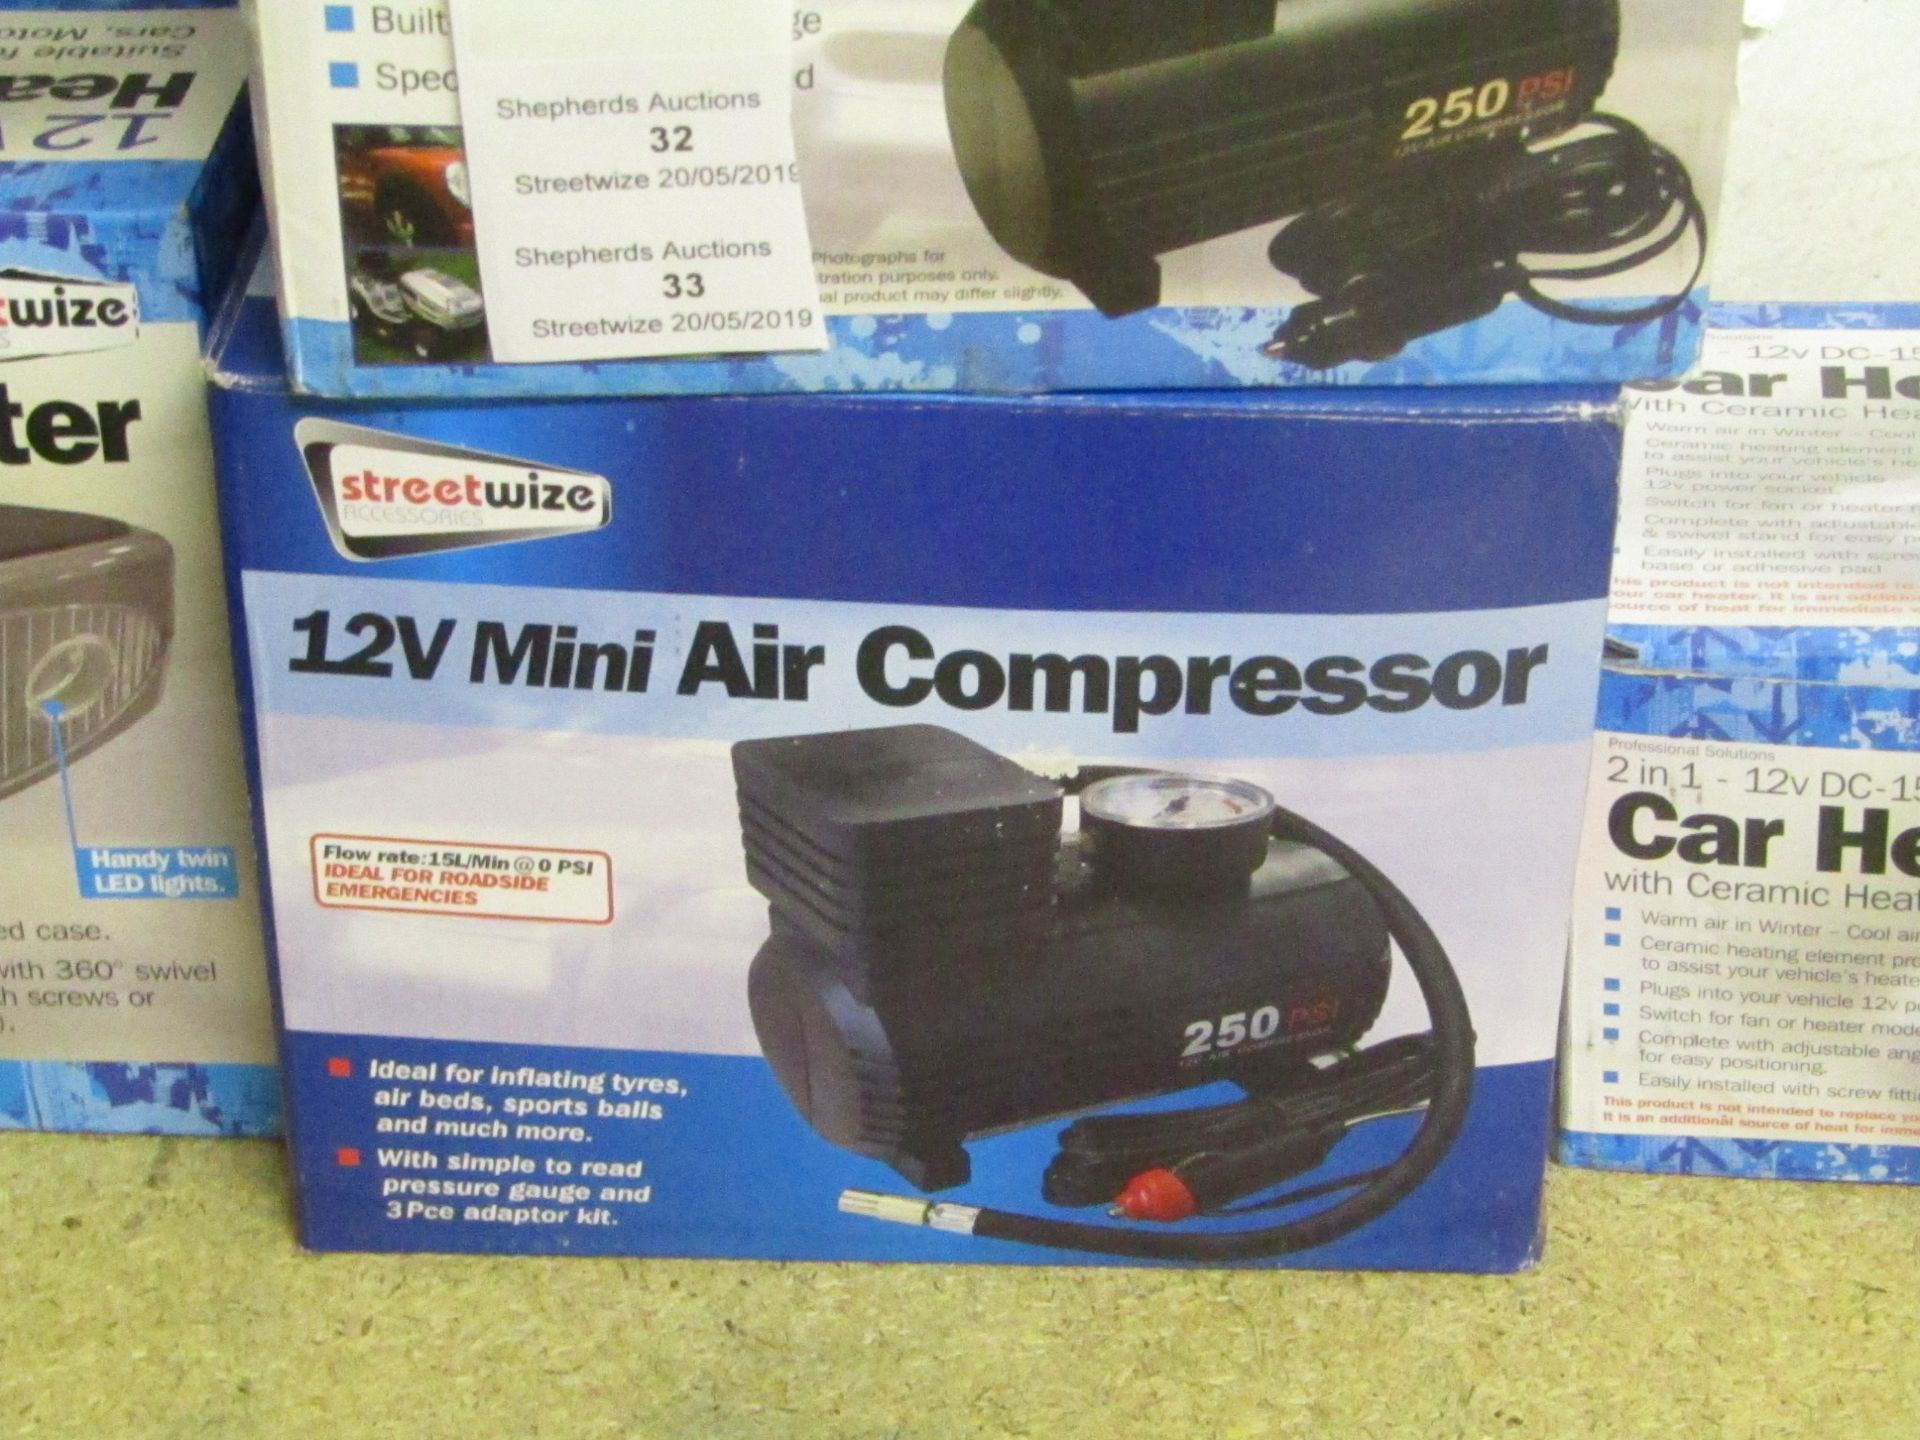 Streetwize 12v mini air compressor, unchecked and boxed.